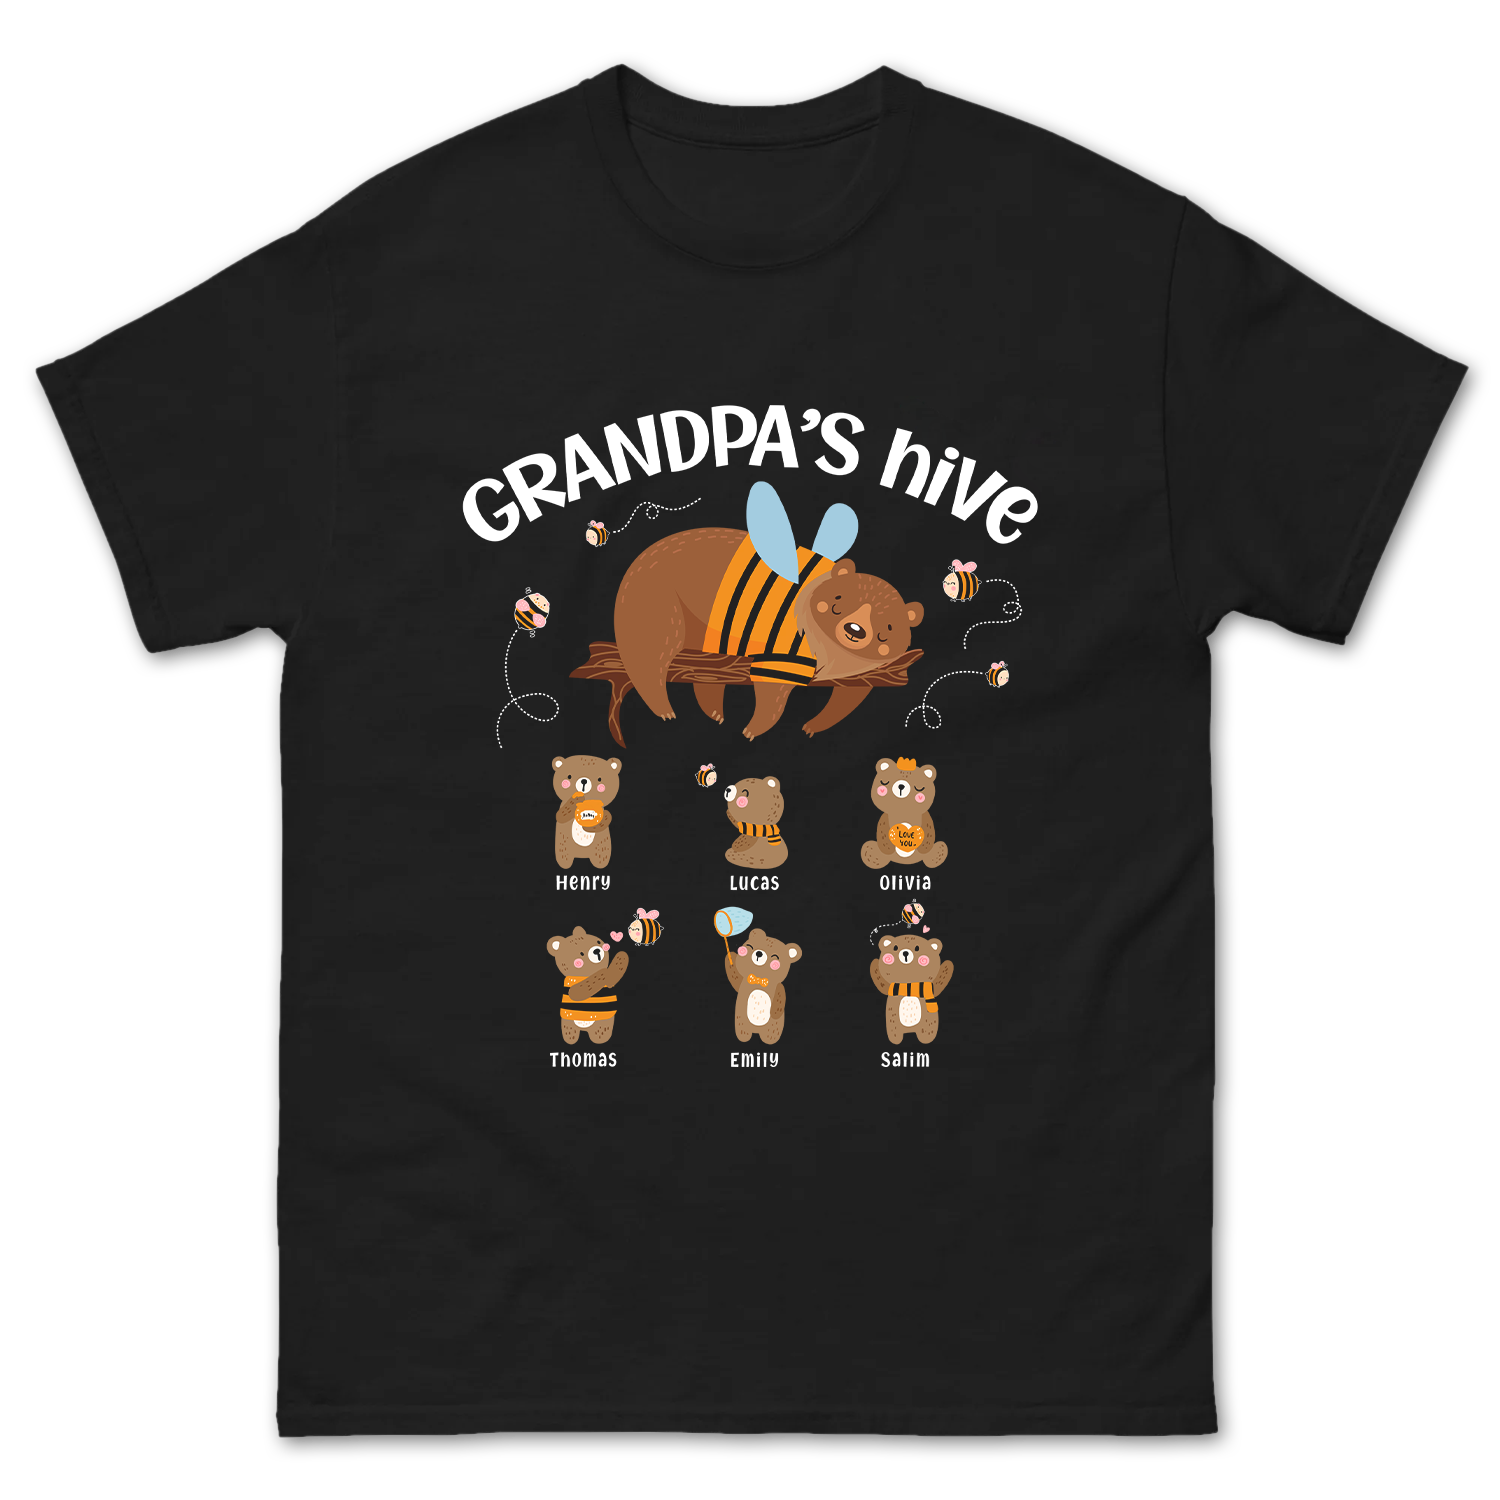 Custom Grandpa's Hive Design Shirt